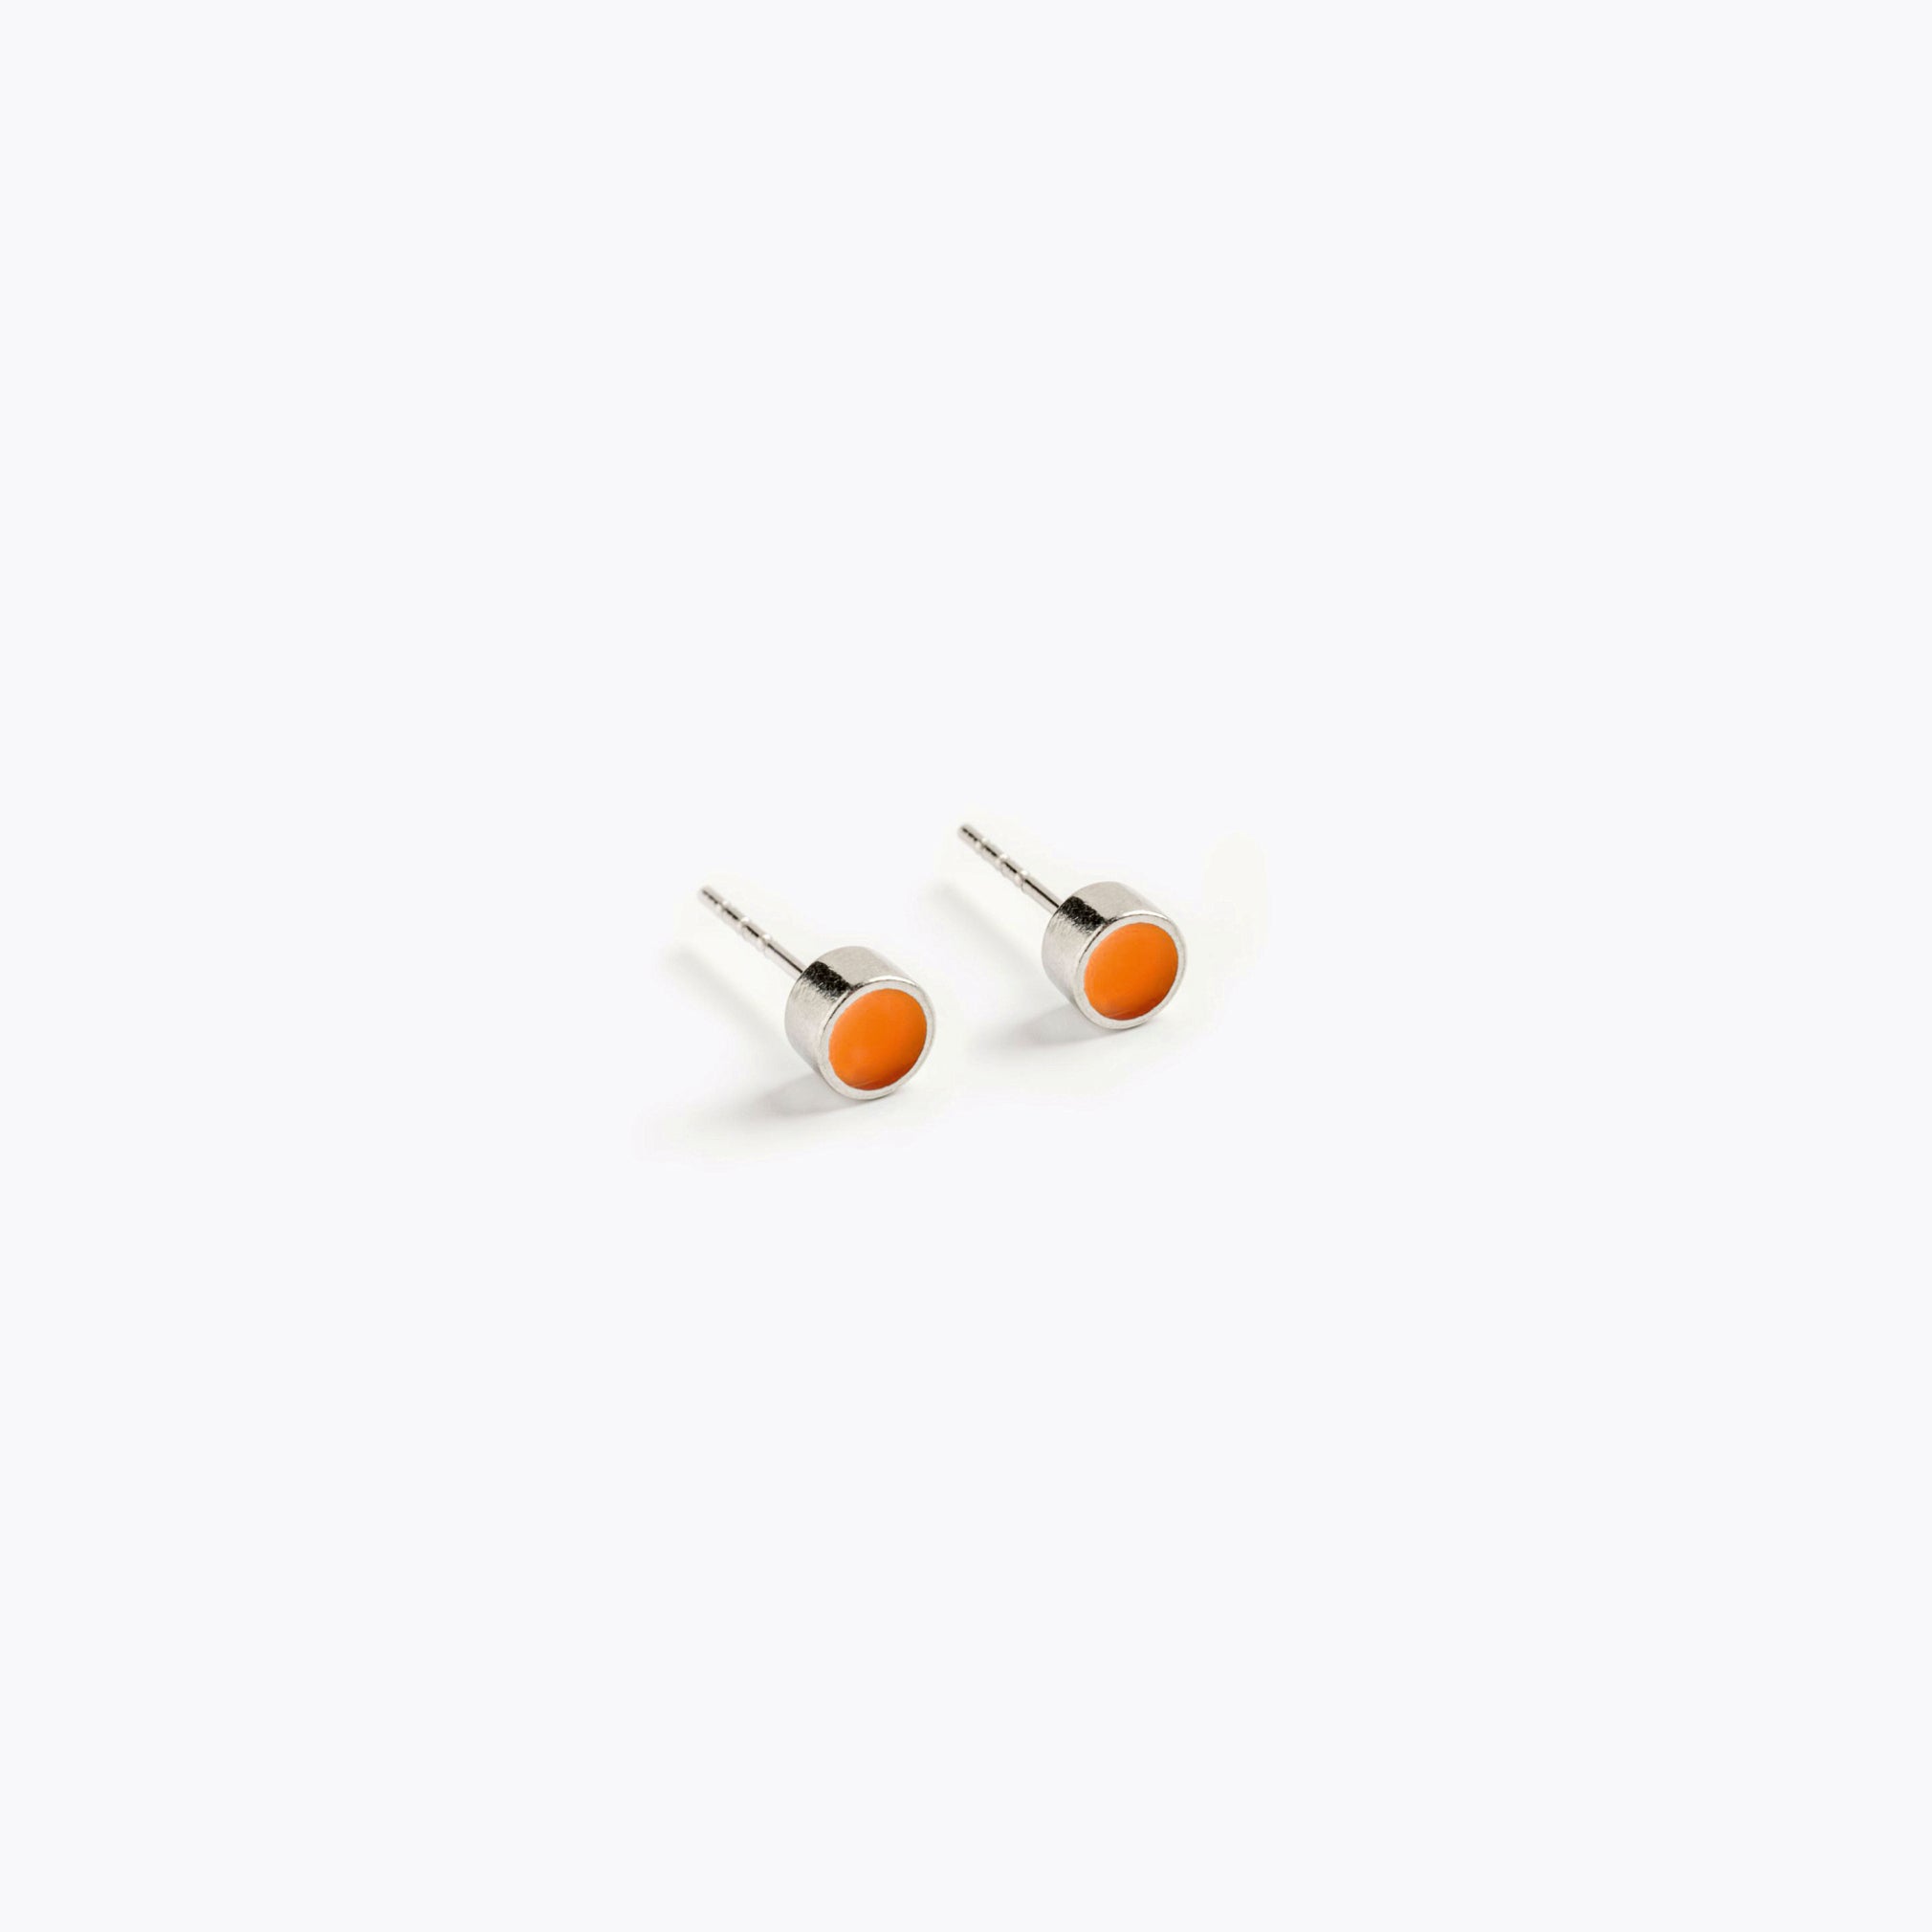 A simple pair of small, orange, circular stud earrings.